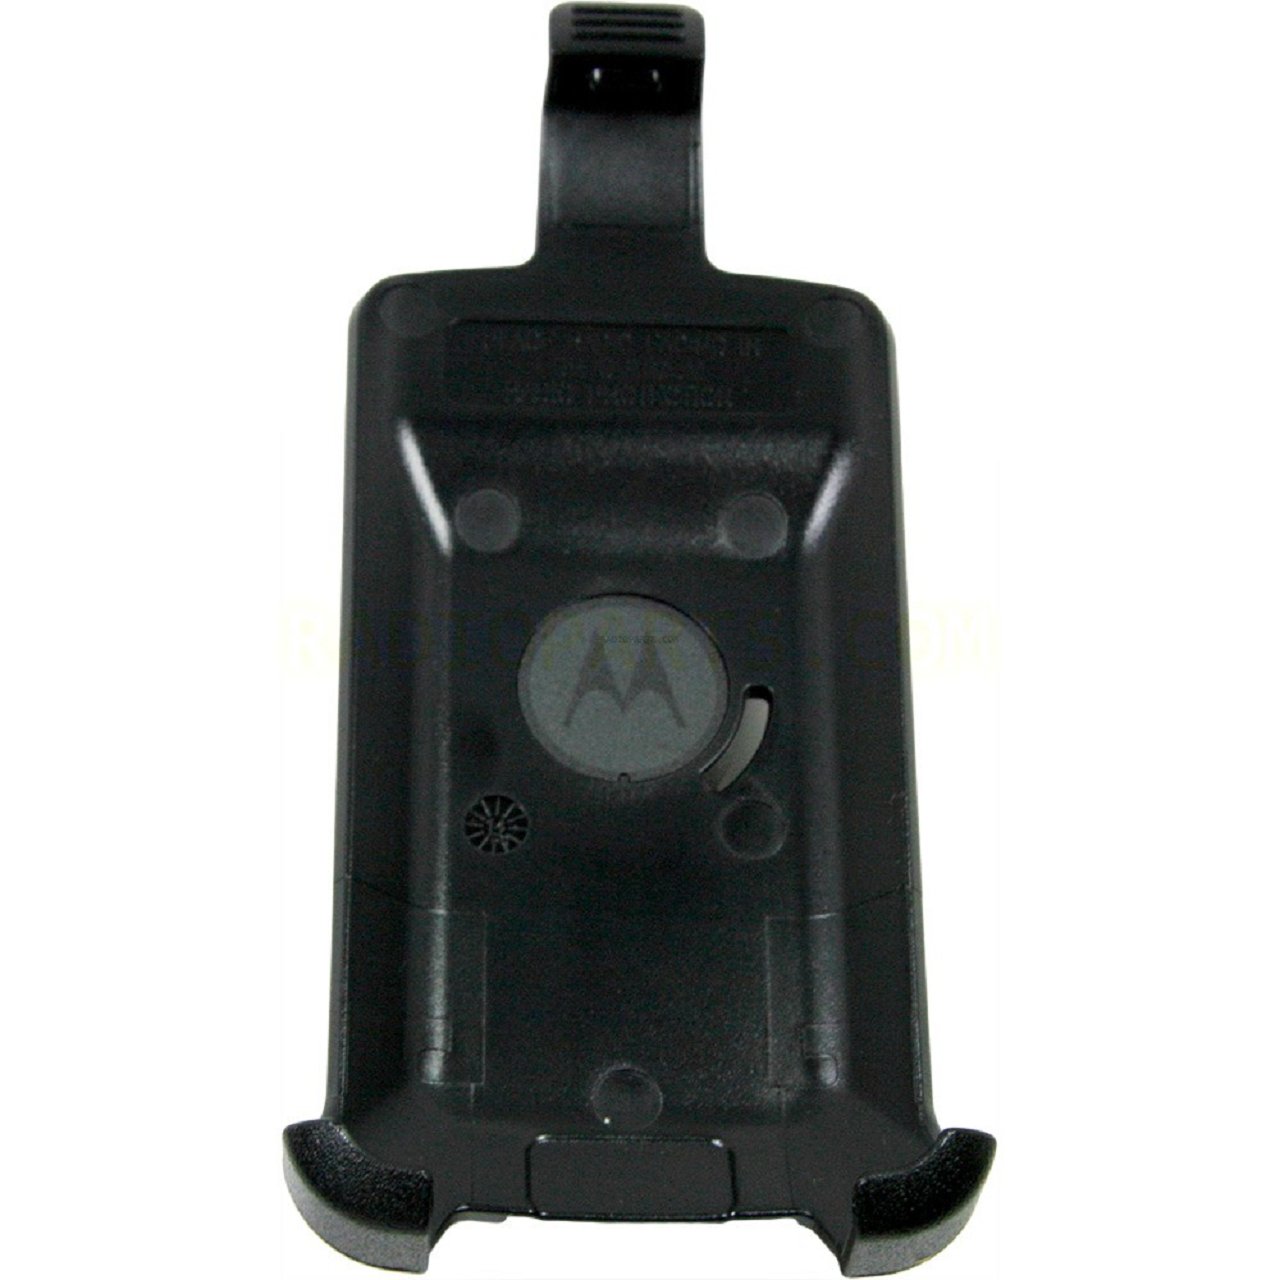 Clip ceinture pour radio Motorola GP330 – plastique, noir